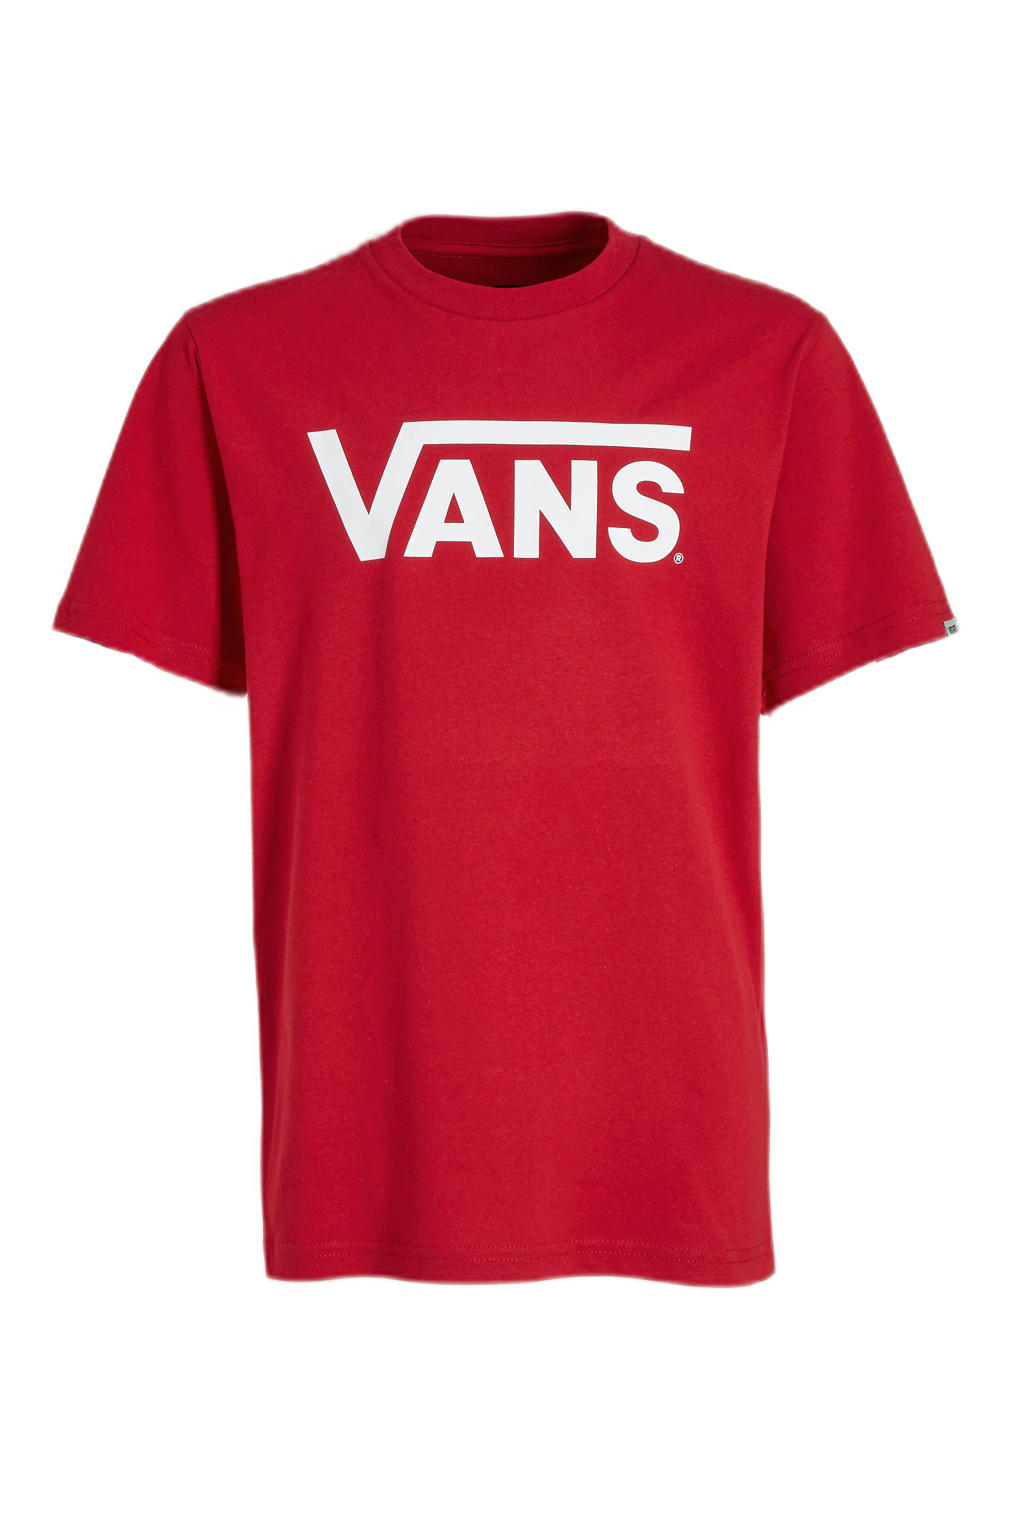 VANS T-shirt rood